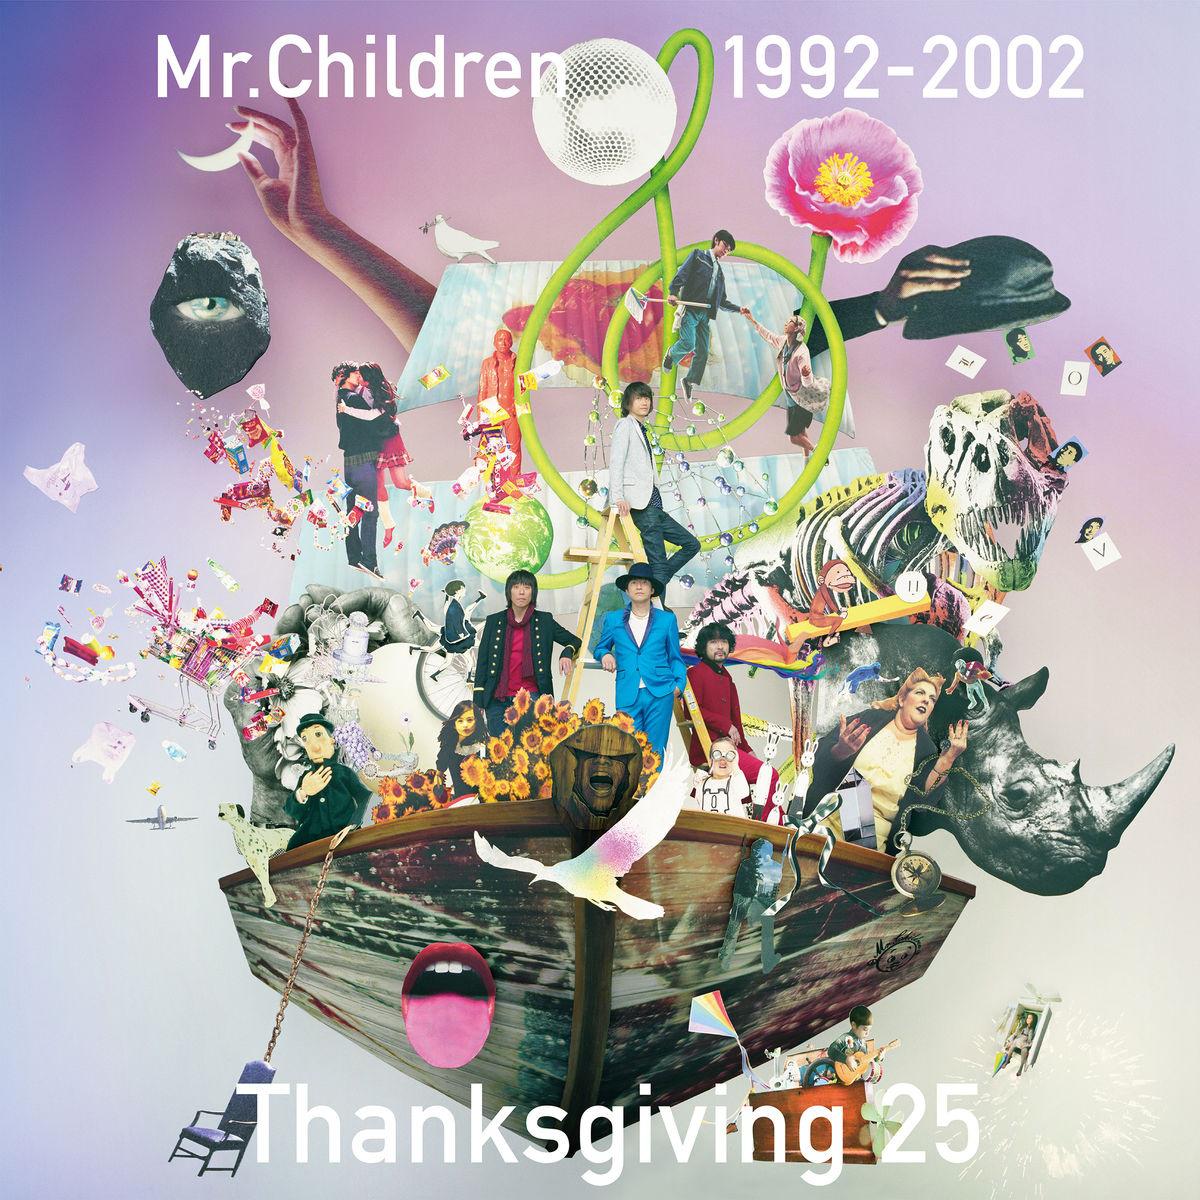 Mr.Children 1992-2002 Thanksgiving 25 - 歌单- 网易云音乐